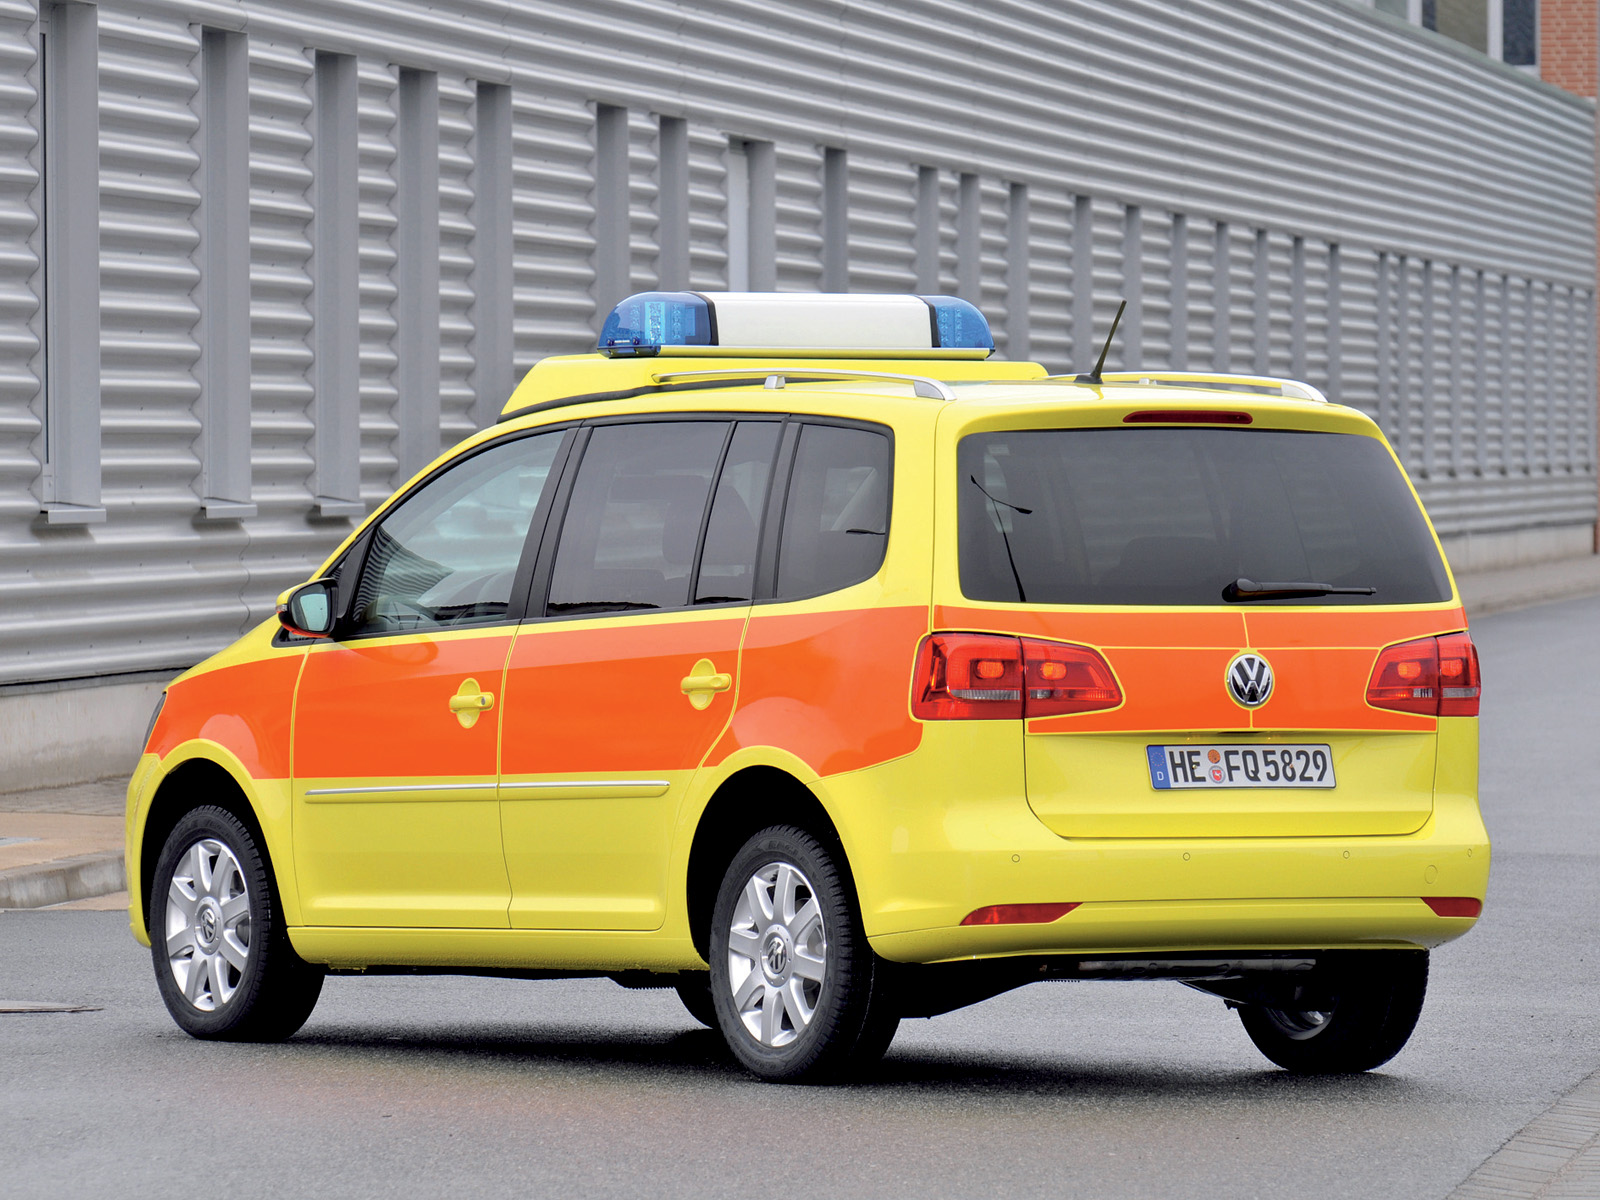 2010, Volkswagen, Touran, Notarzt, Ambulance, Emergency Wallpaper